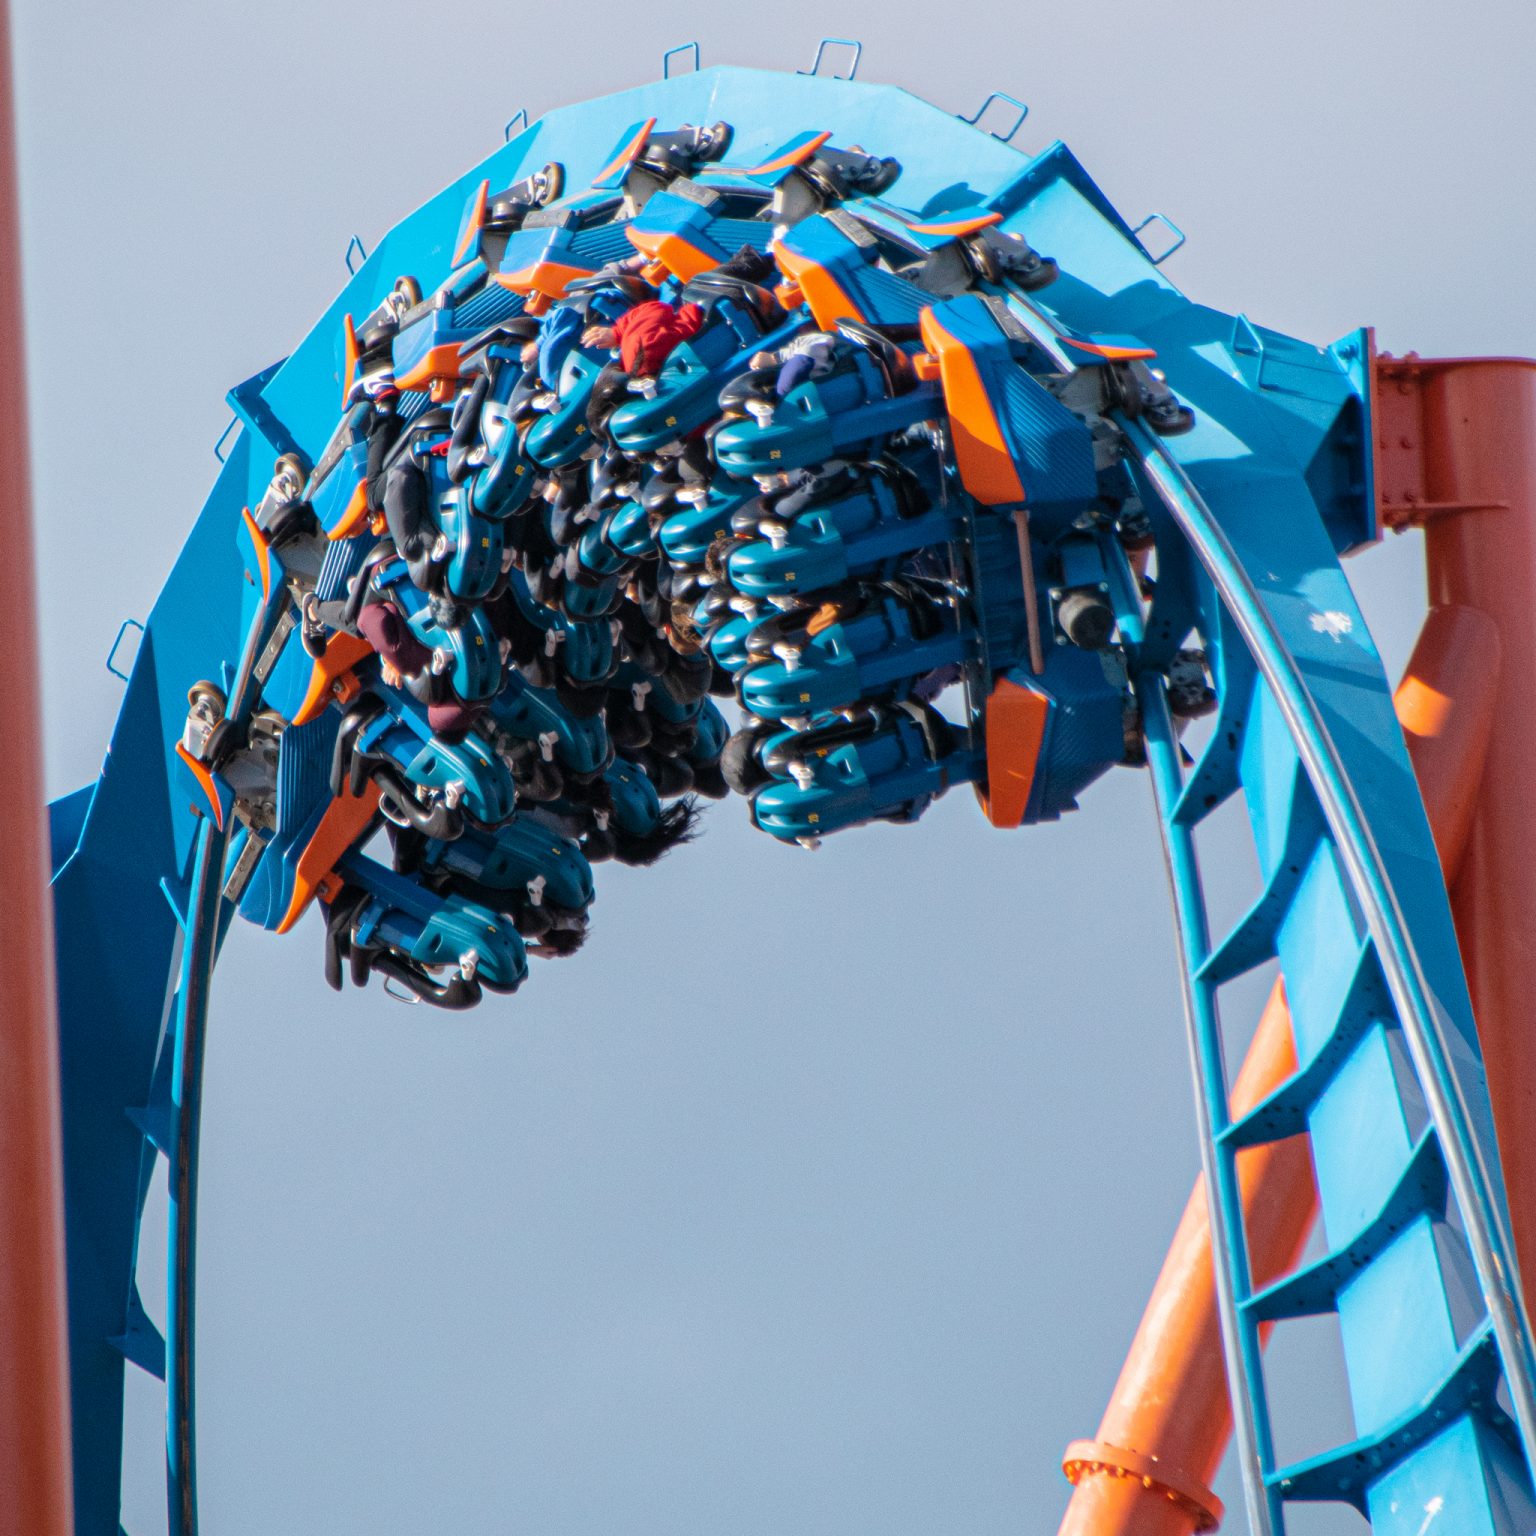 Six Flags Magic Mountain Announces New Annual Pass Program Coaster Kings